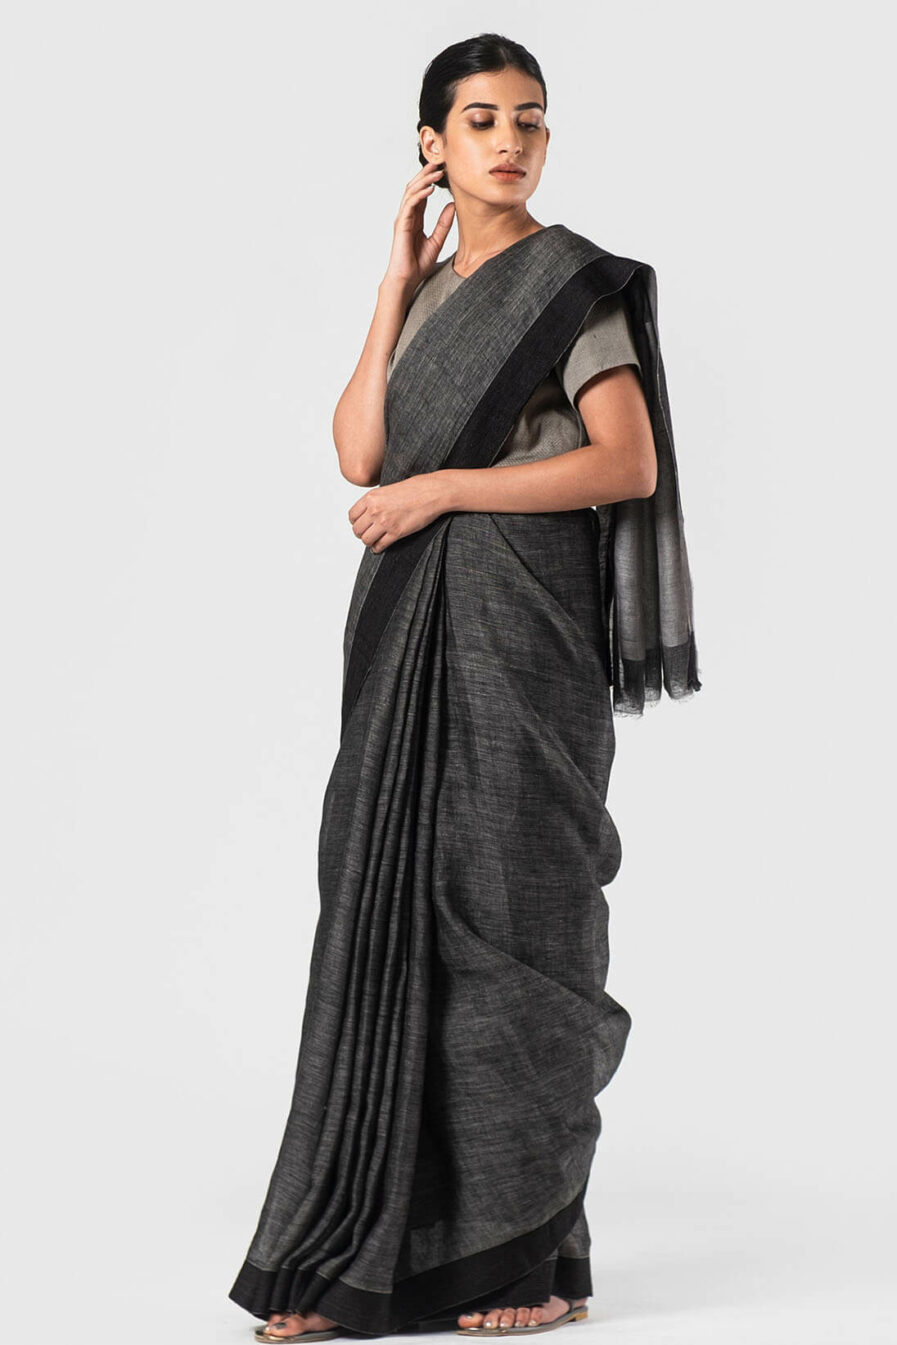 Anavila Charcoal Twill border summer linen sari